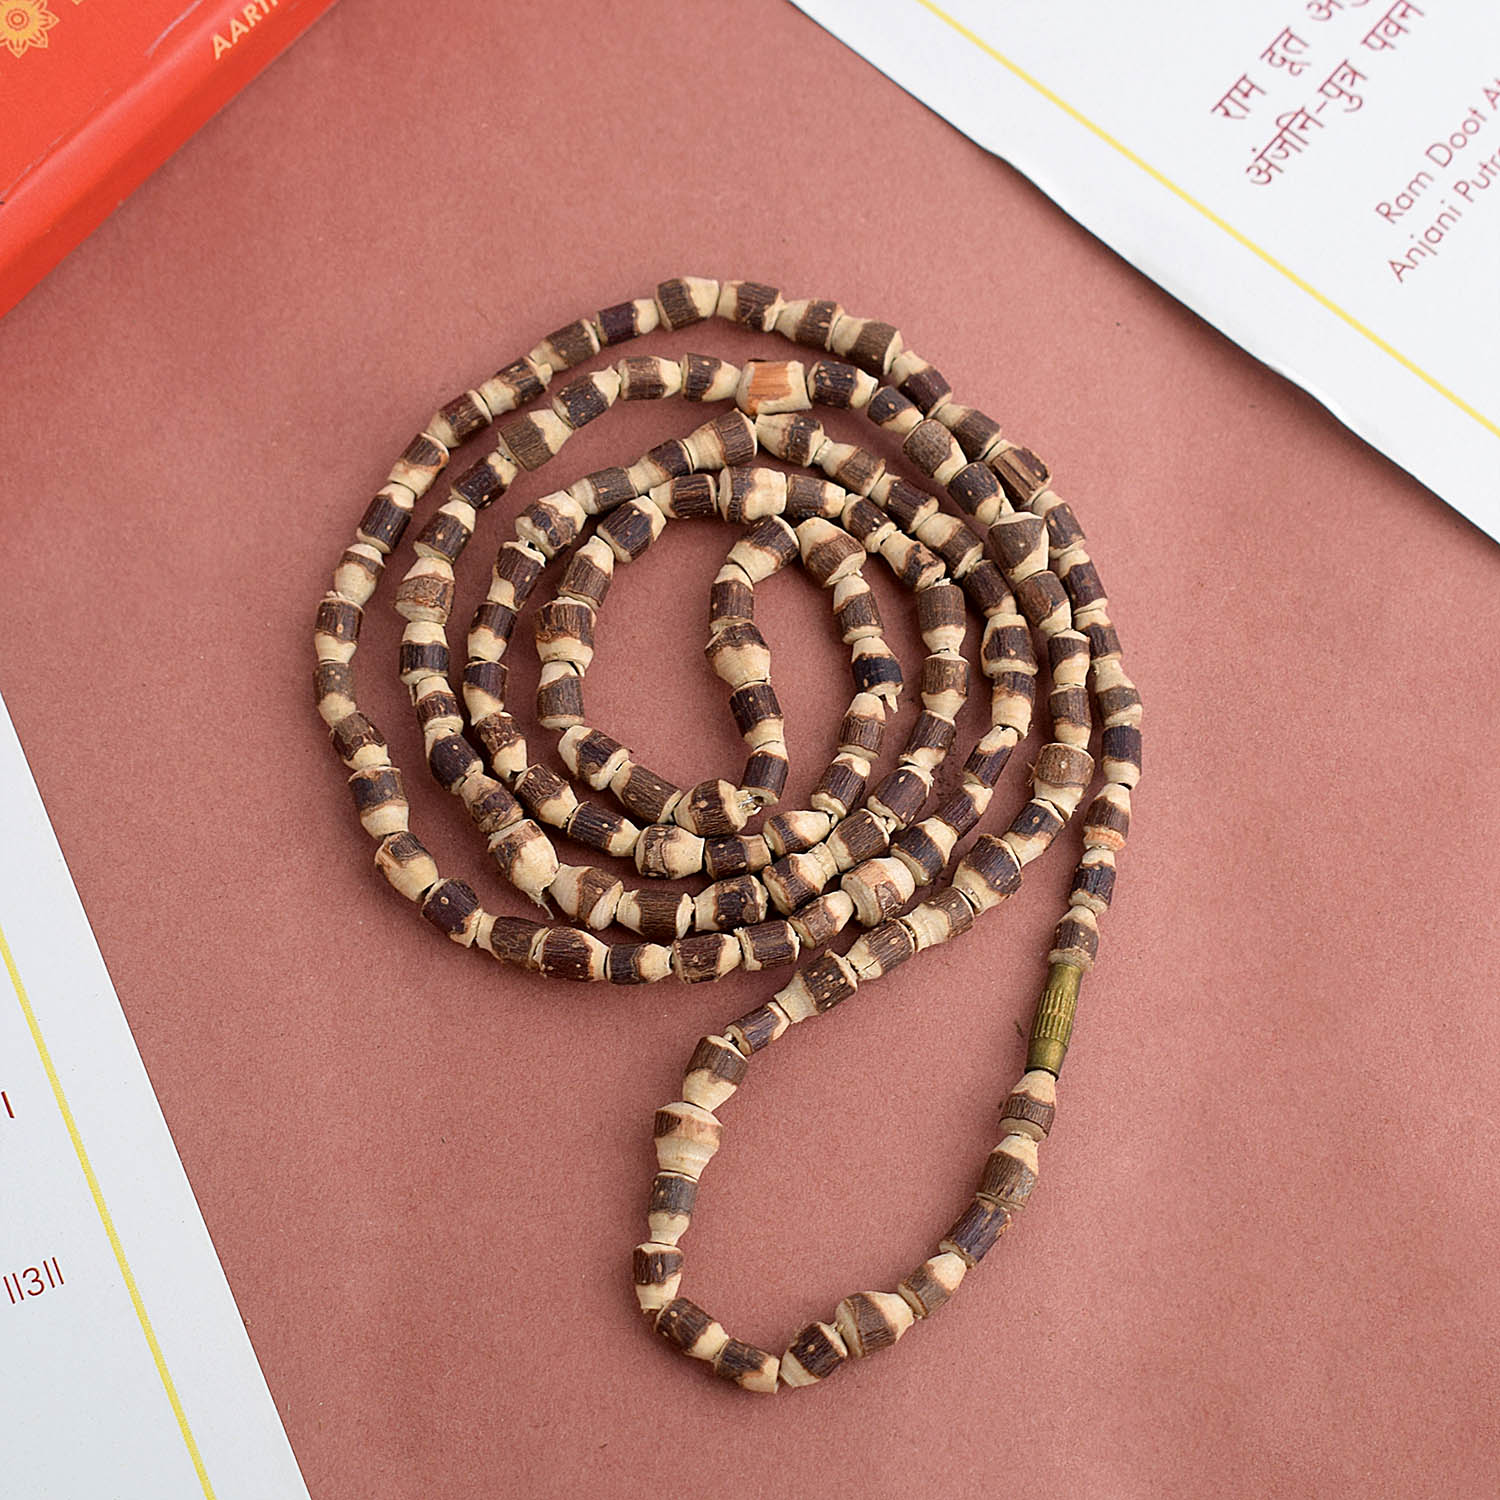 Black Tulsi mala beads 6mm Holy Basil beads sacred Mala Rosary Meditation  beads - sacred necklace -Gift box Rosary pouch- Nepal - US seller